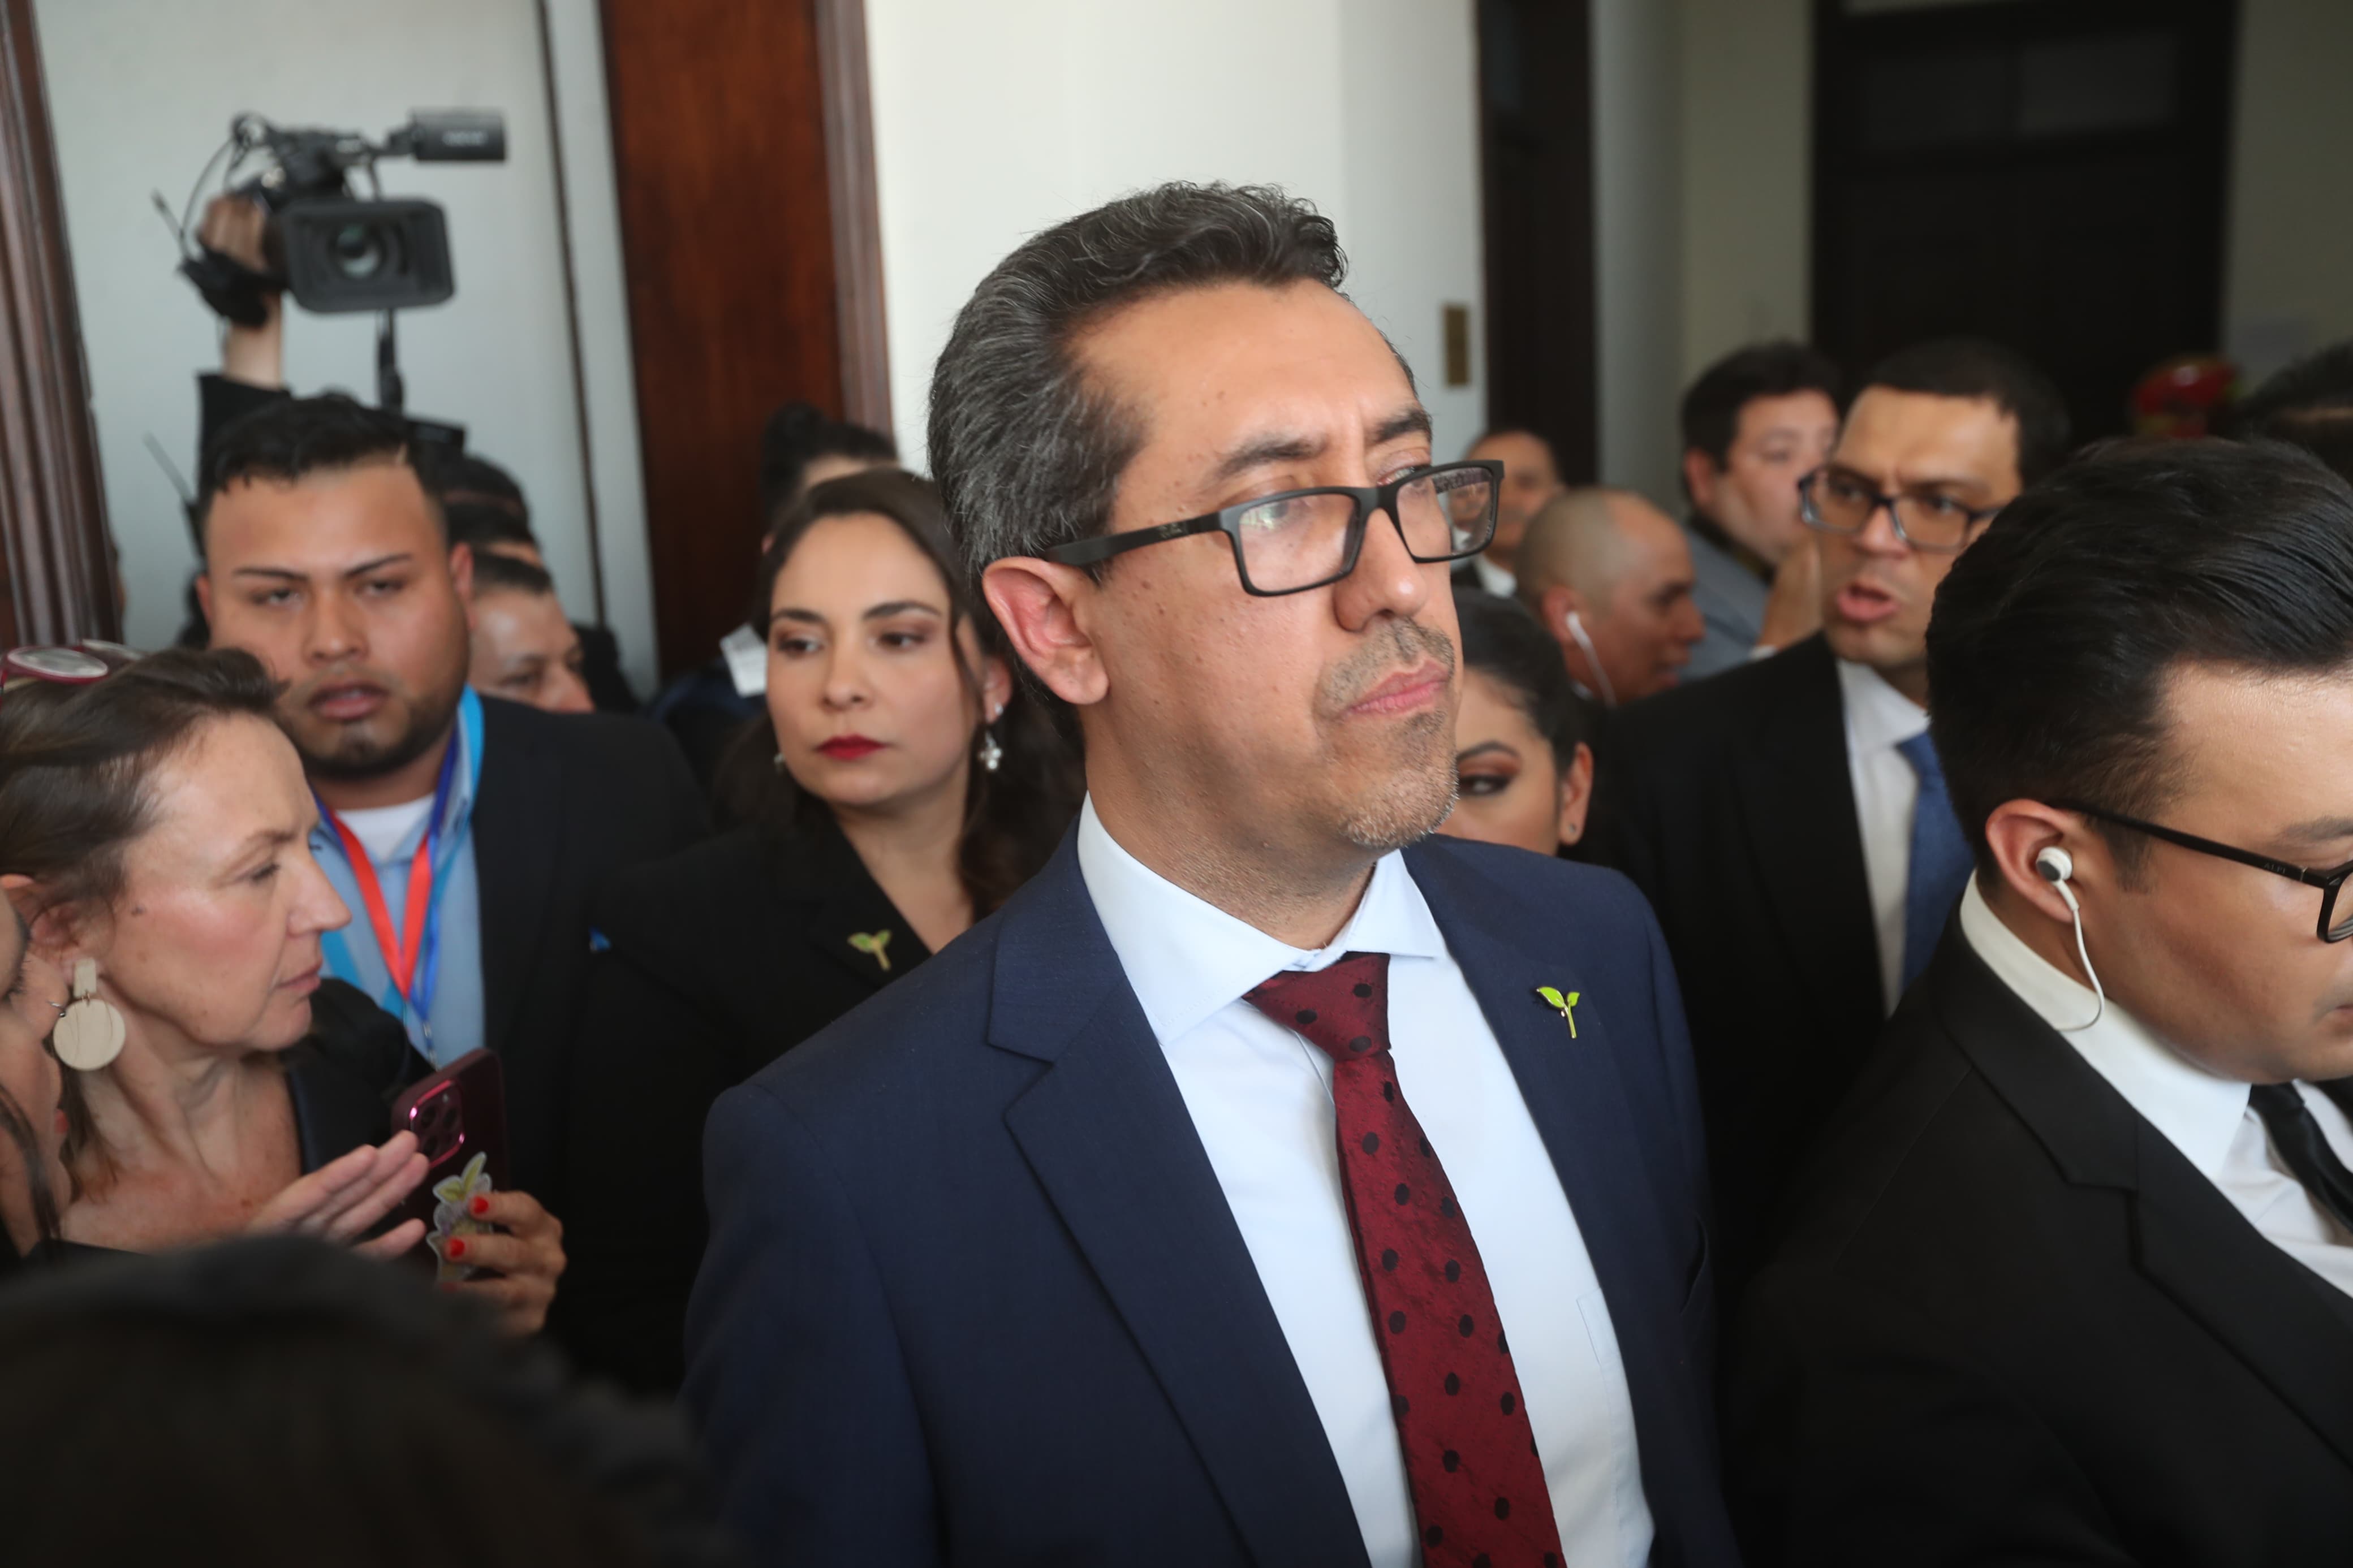 Momentos de tensión en Guatemala: disputa en el Congreso causa retrasos previo a la toma de posesión de Bernardo Arévalo como presidente